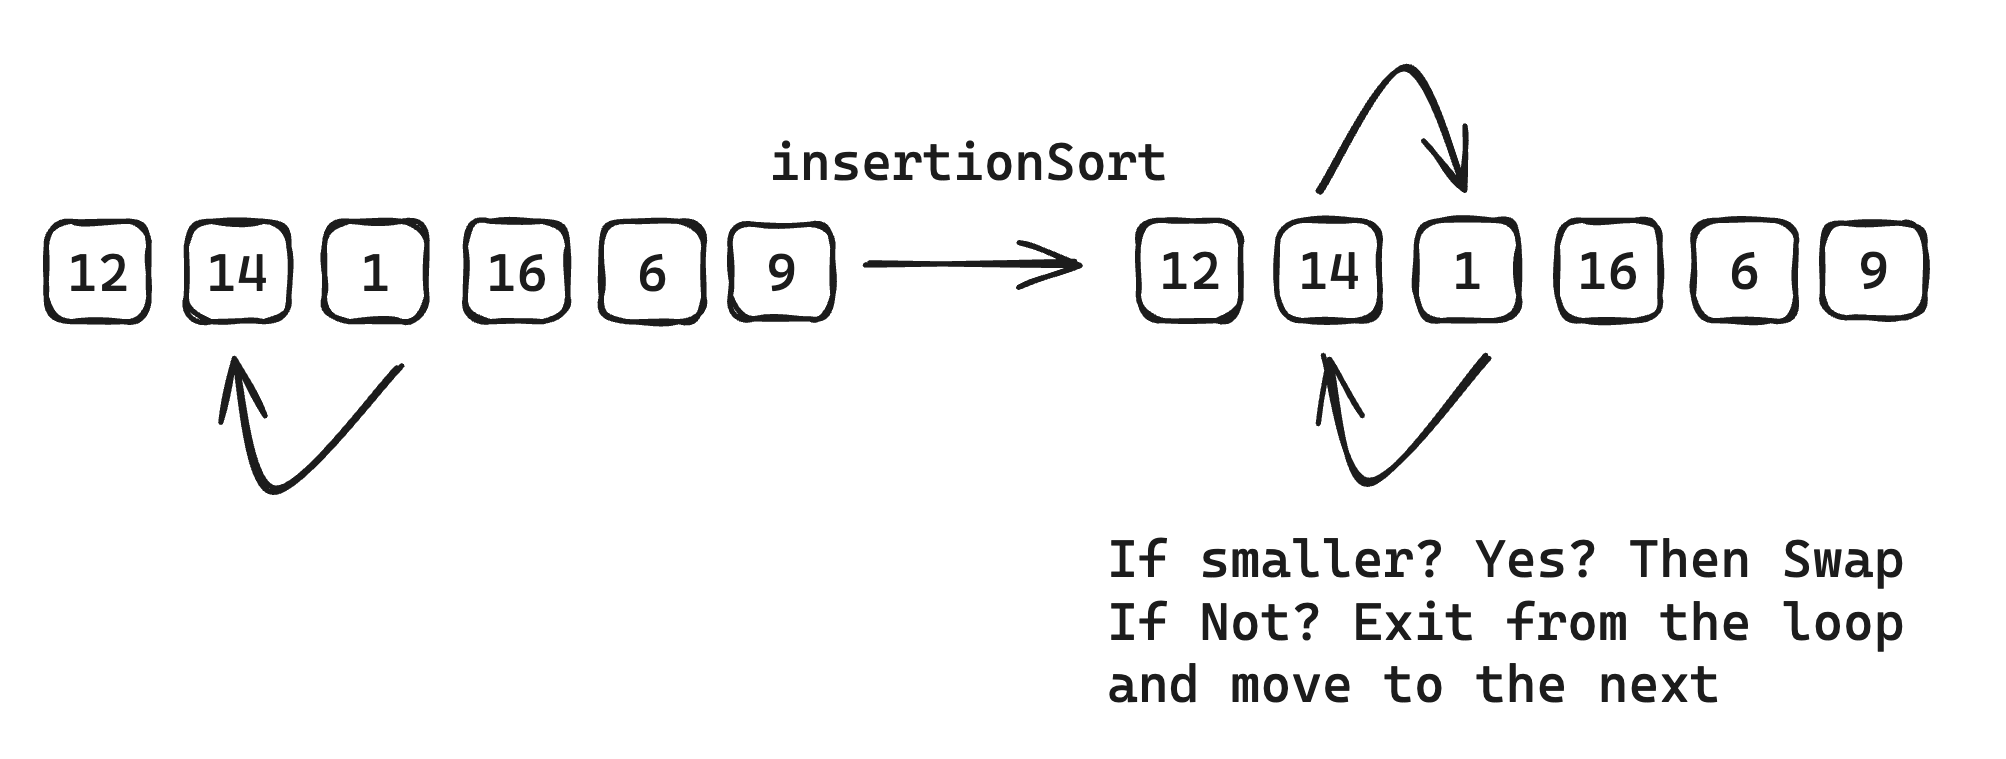 Insertion Sort Fifth Iteration